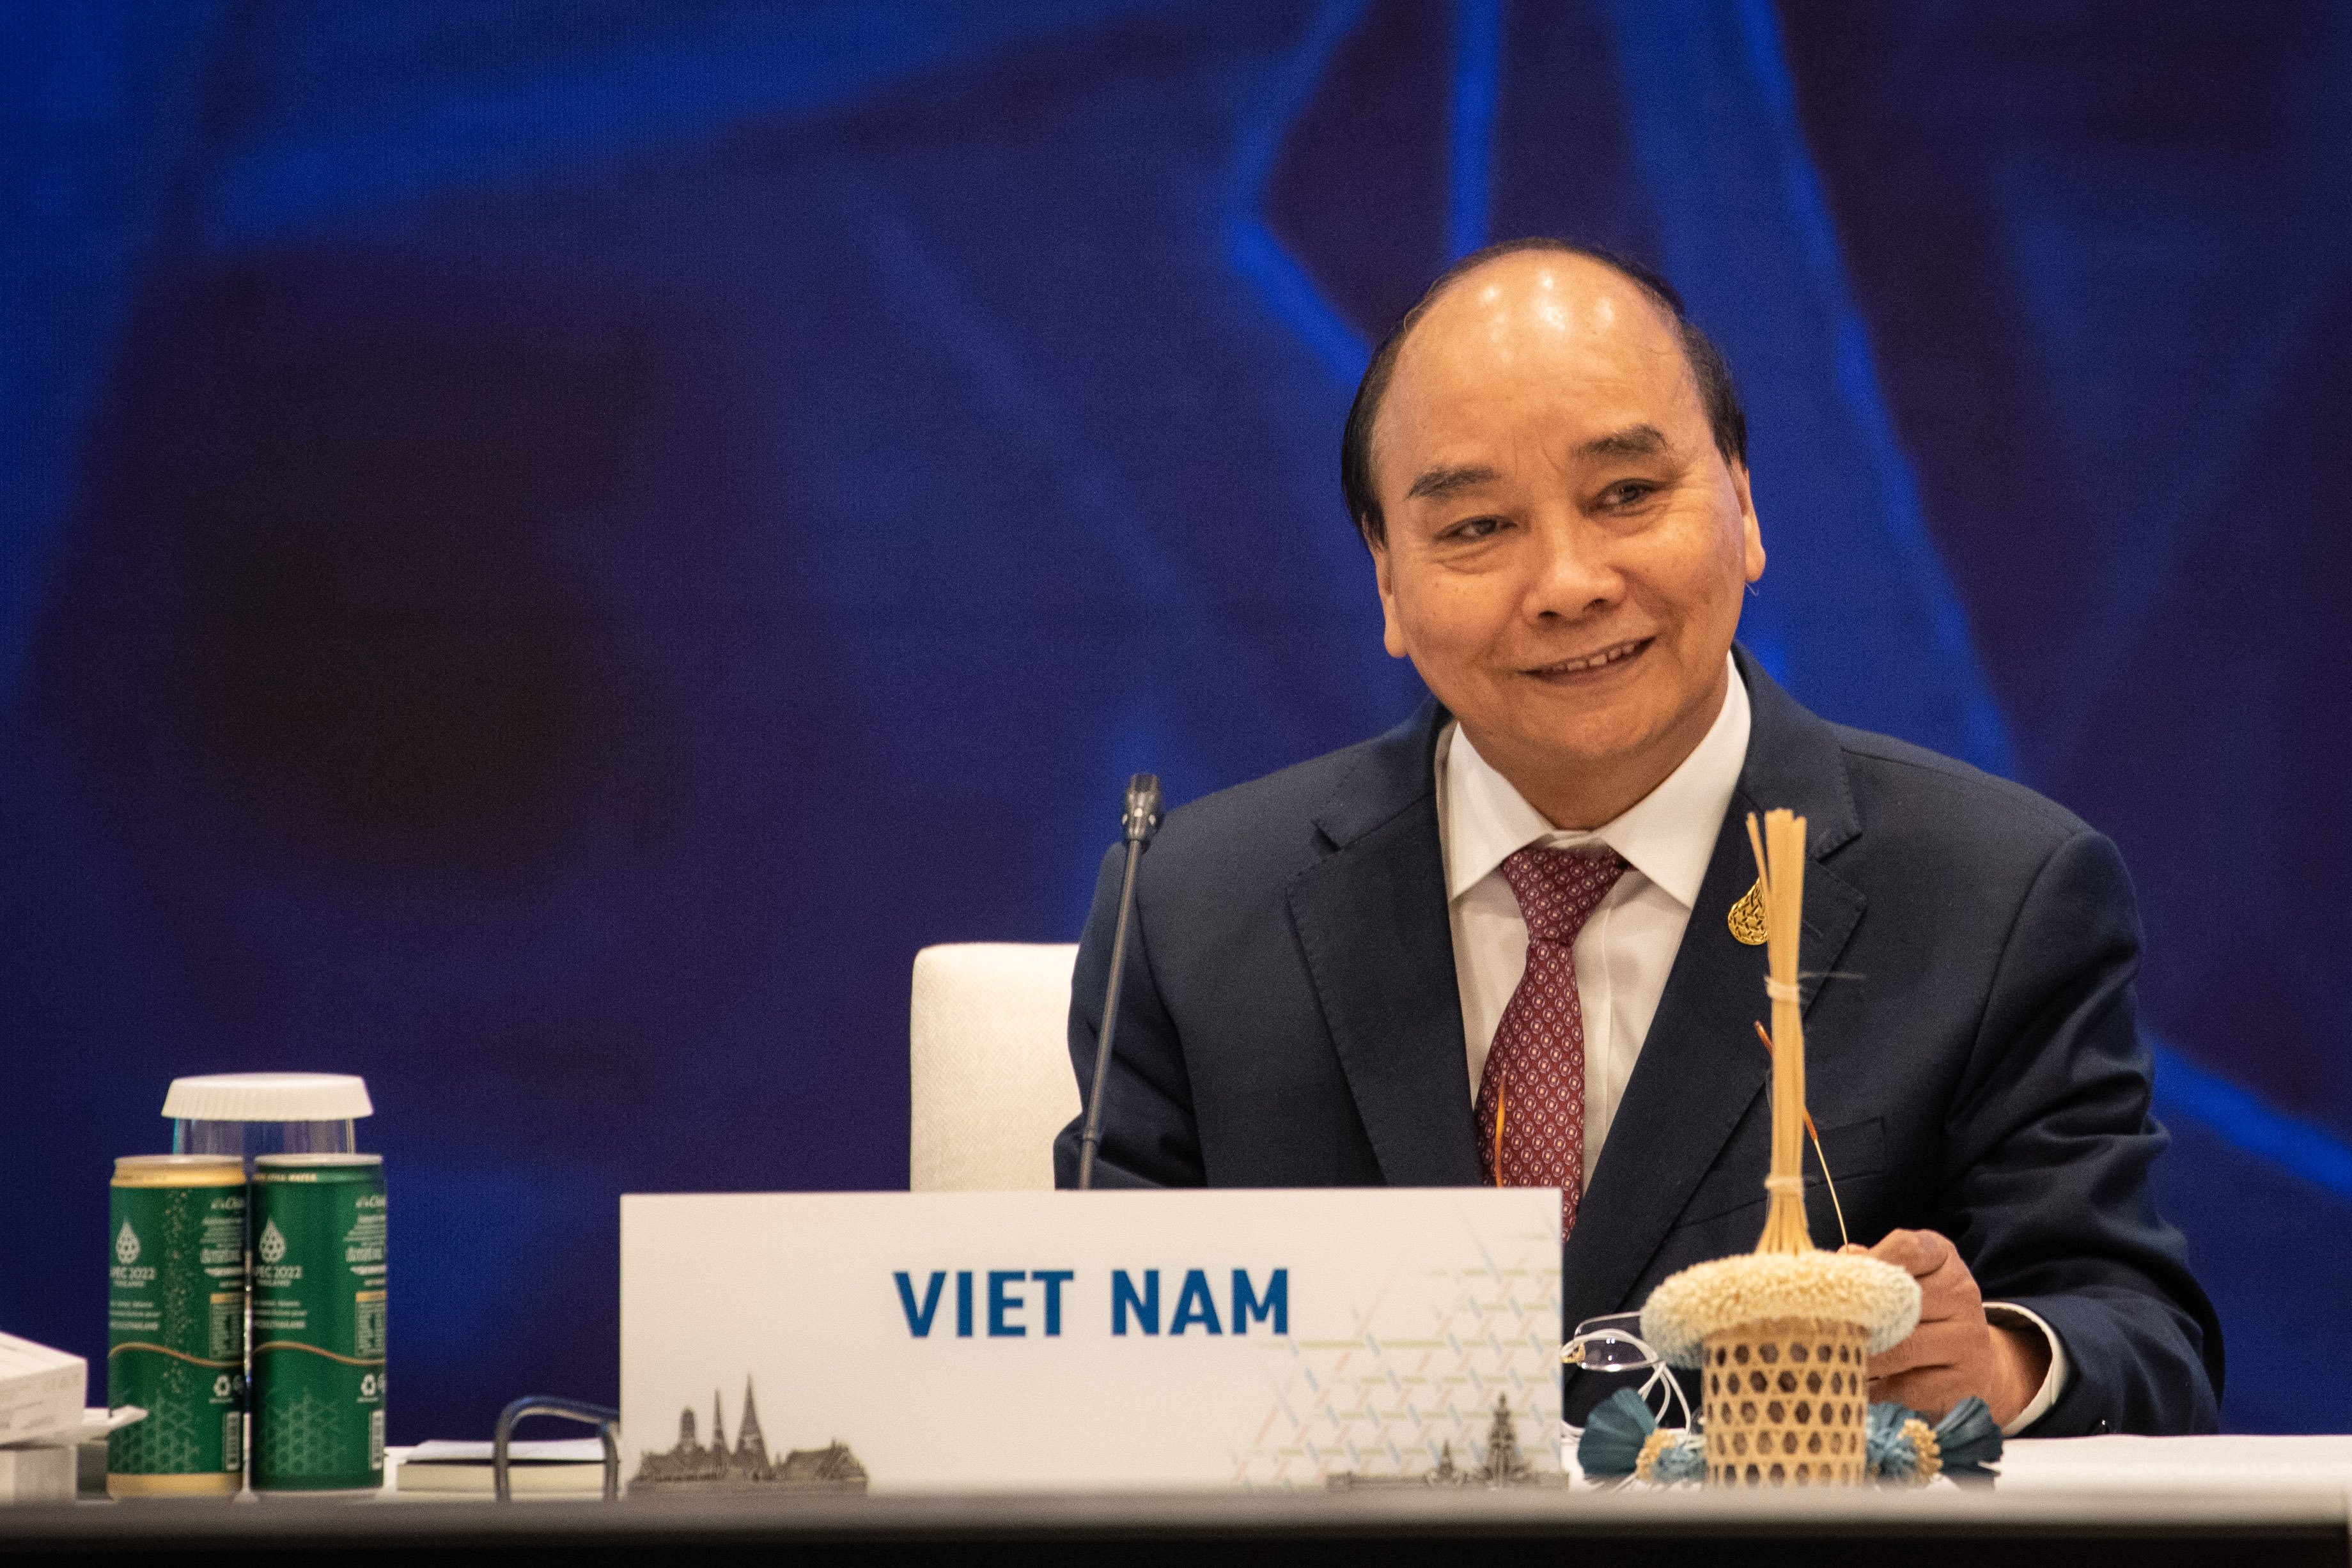 Vietnams Ex-Präsident Nguyen Xuan Phuc 